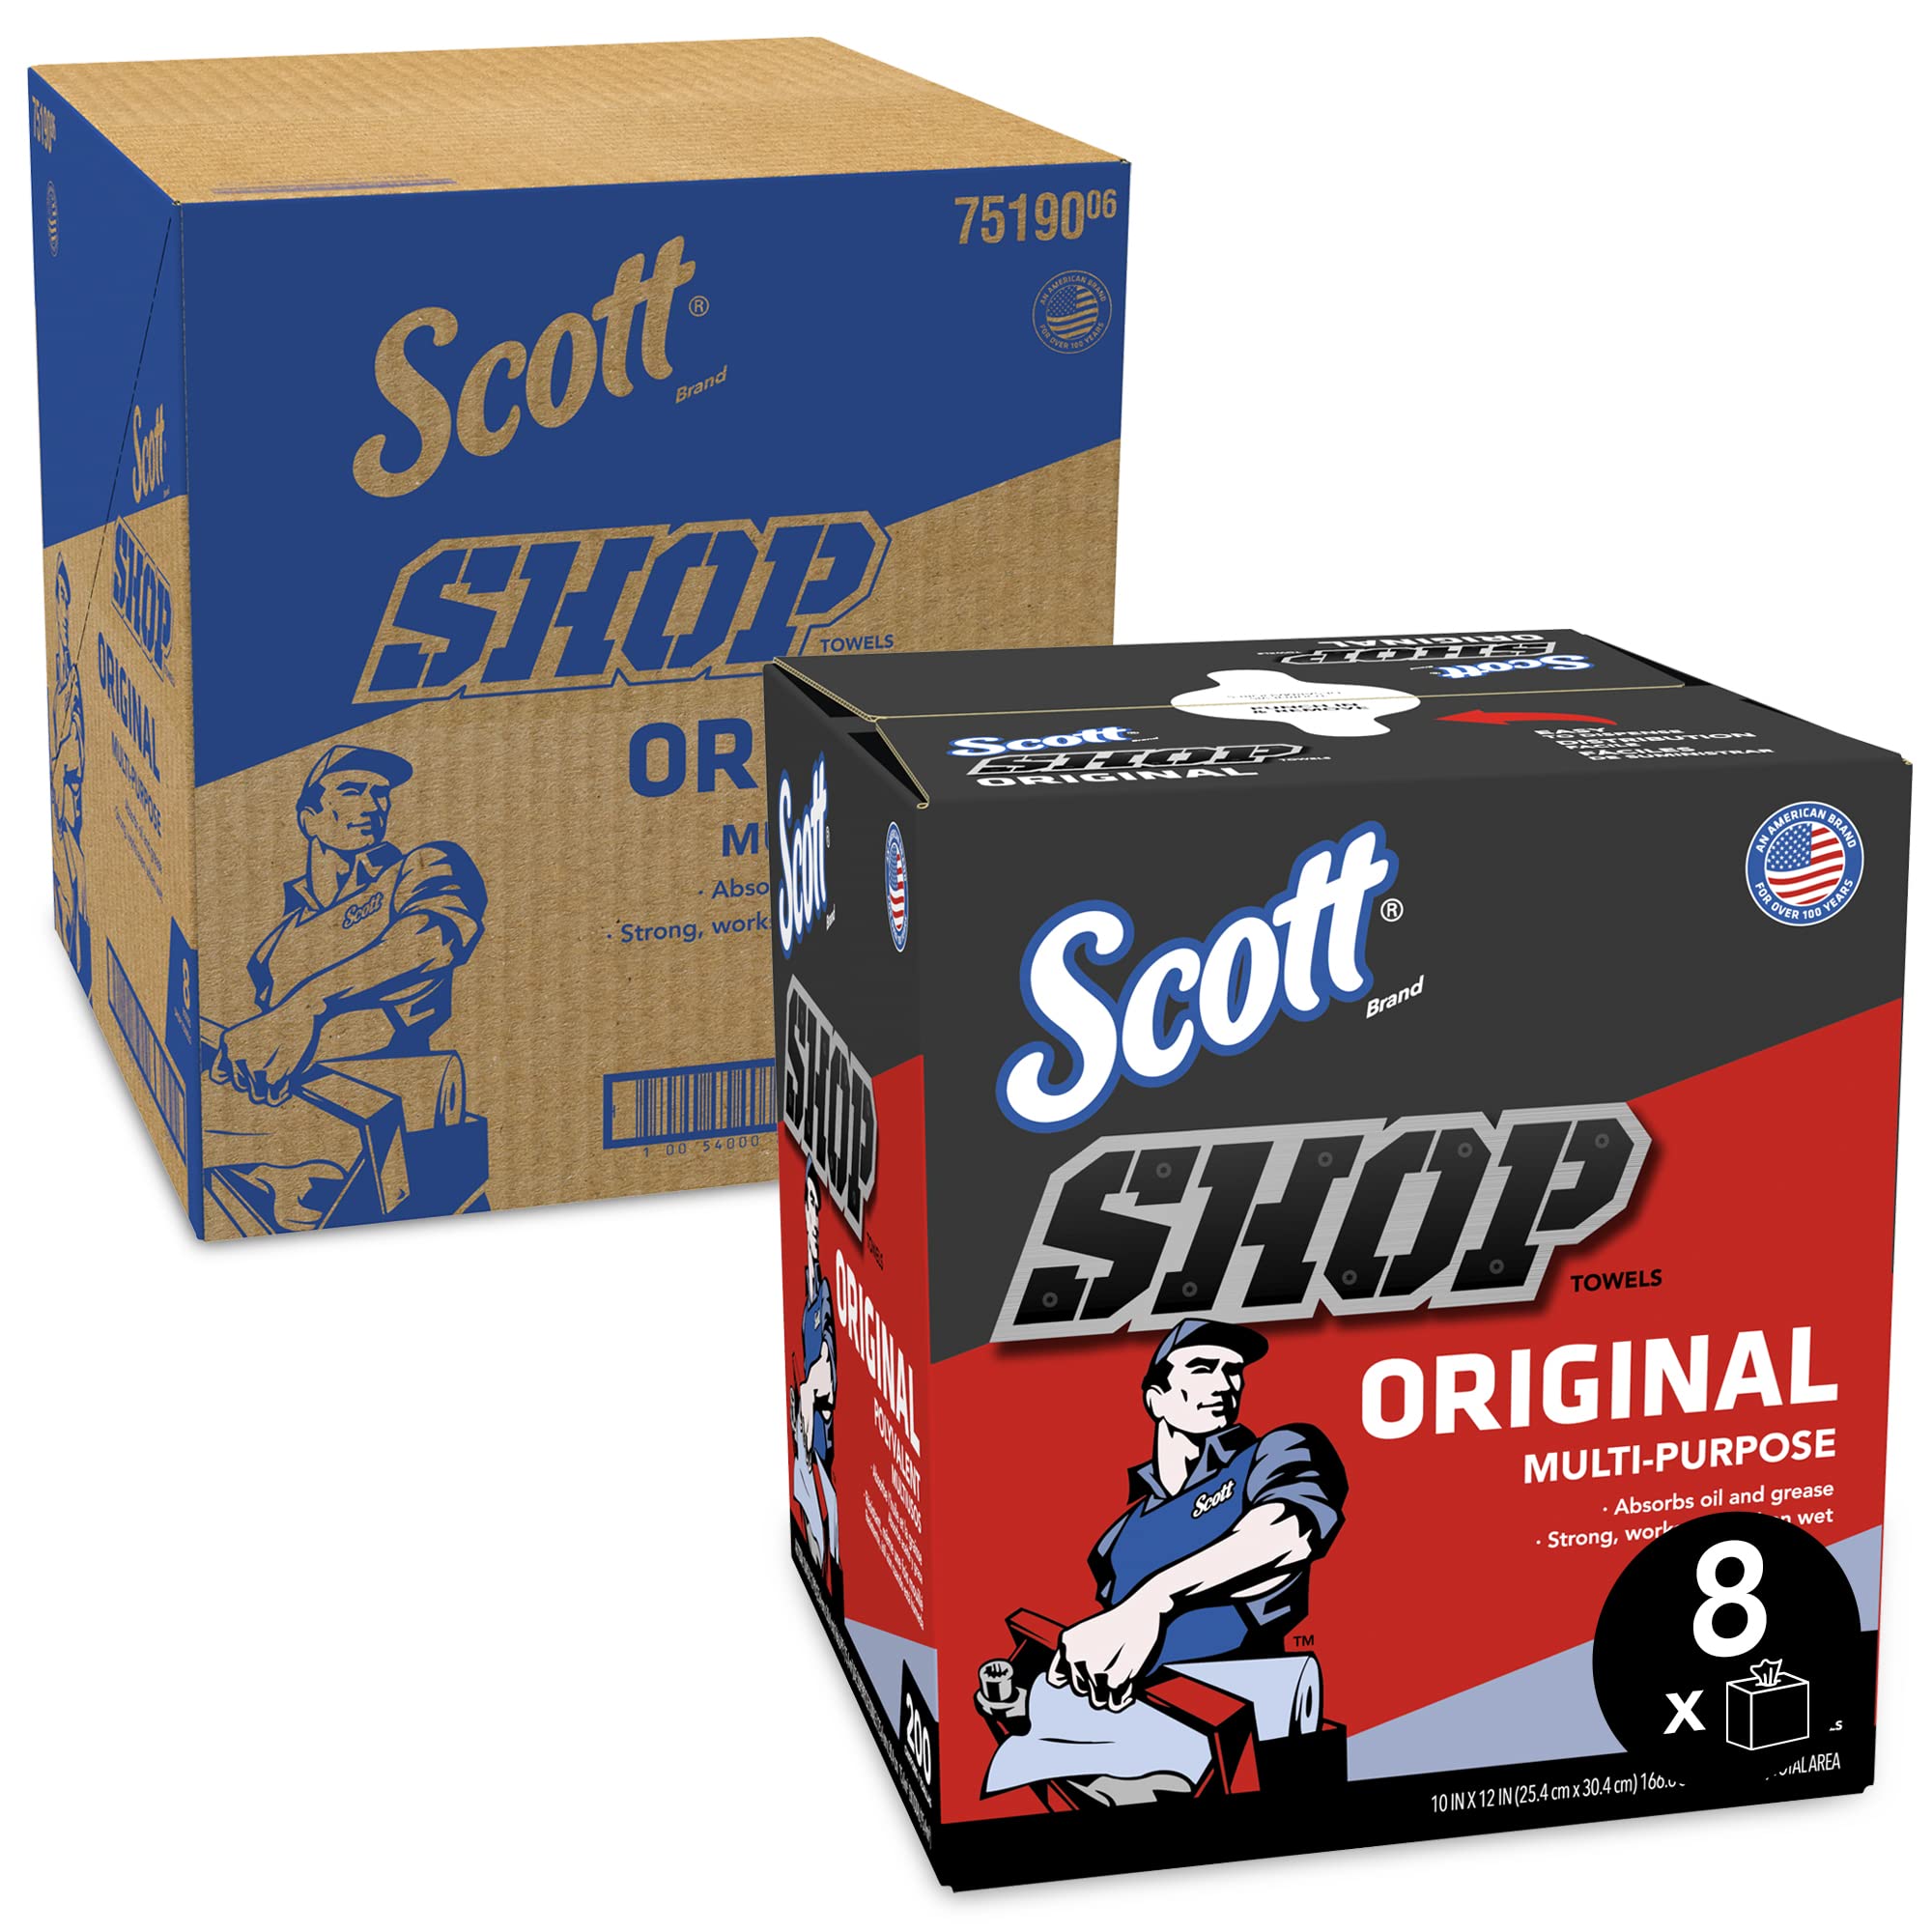 Scott Shop Towels Original (75190), Blue, Pop-Up Dispenser Box, 200 Towels/Box, 8 Boxes/Case, 1,600 Towels/Case